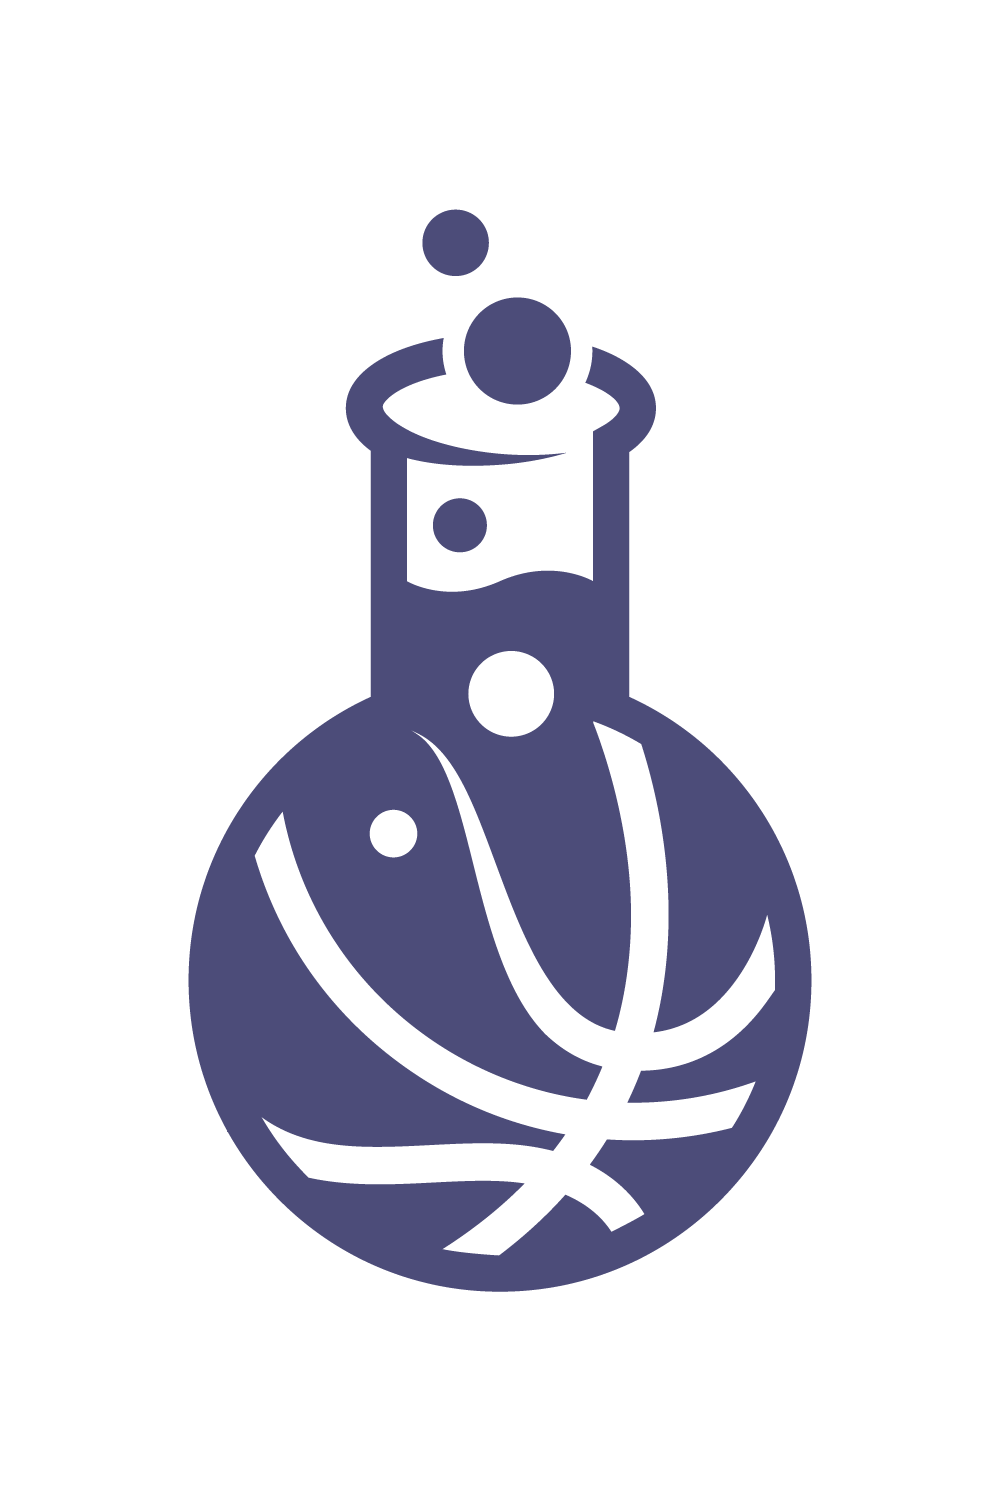 The Hooplabs logo.